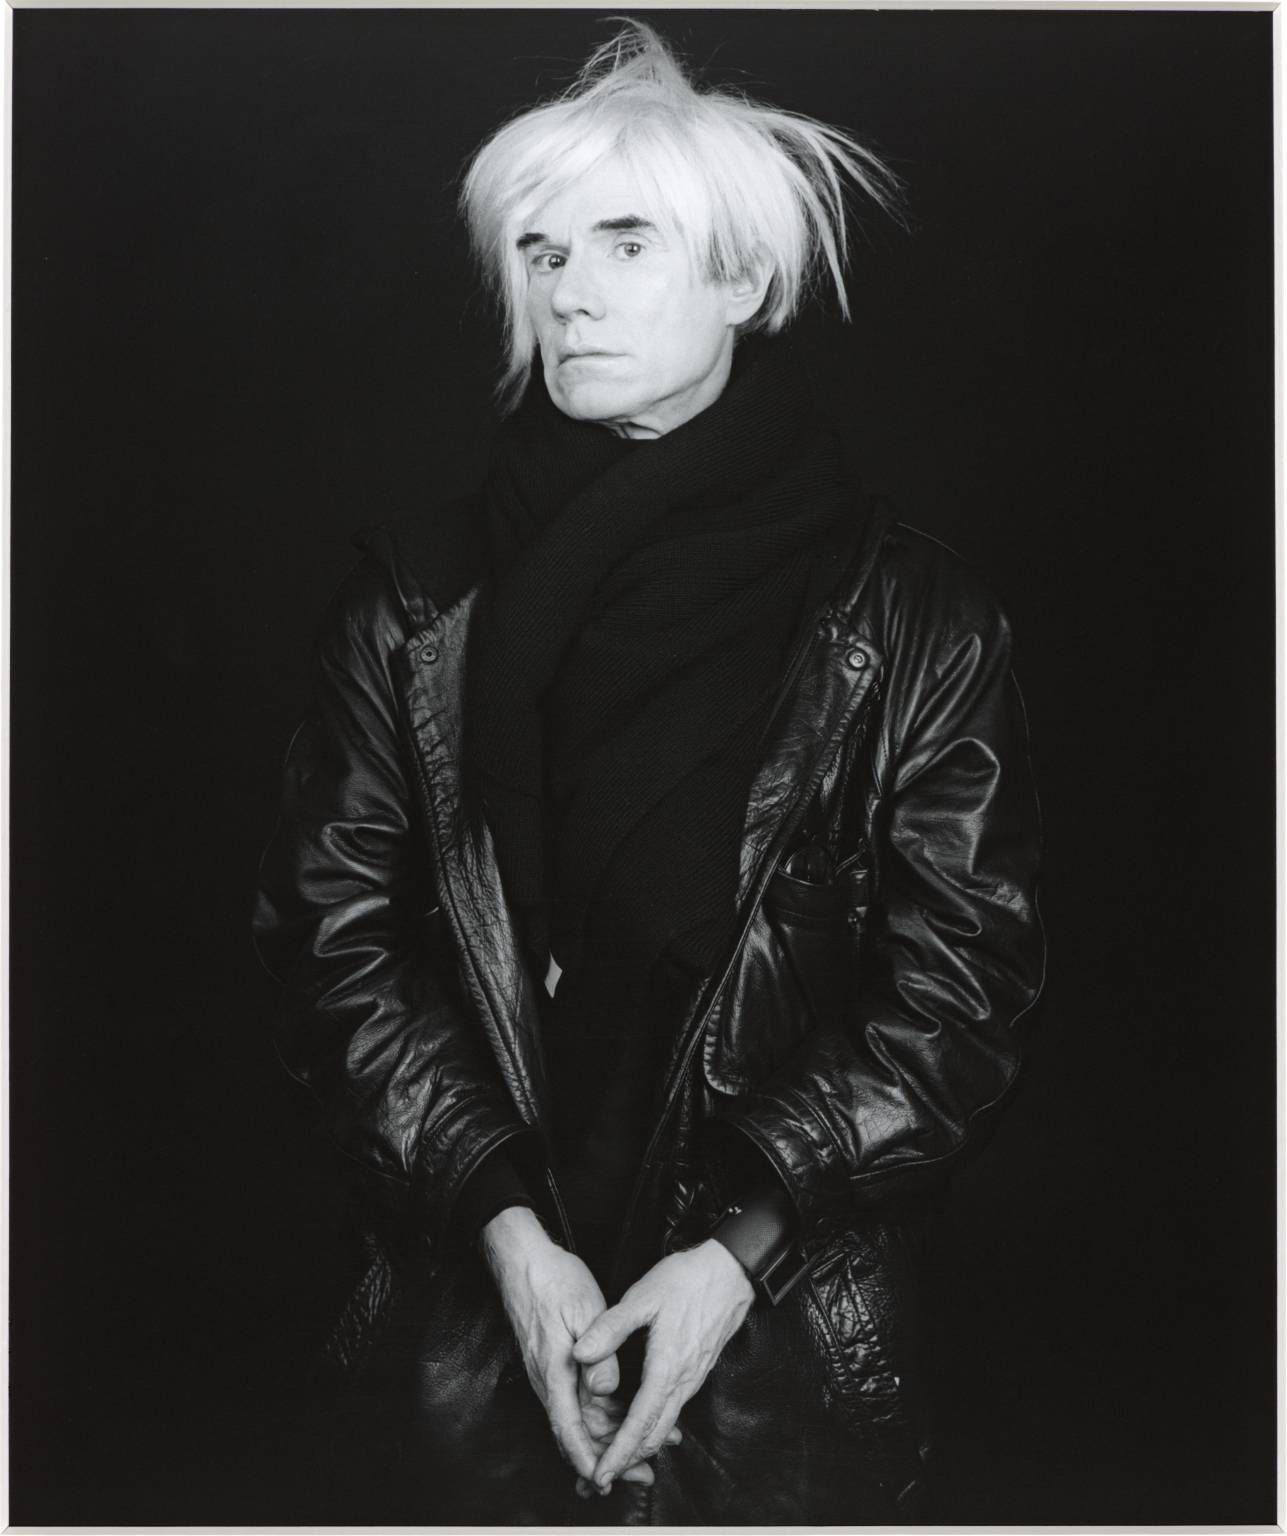 Andy Warhol, 1986 by Robert Mapplethorpe. As displayed in Warhol. Mechical Art